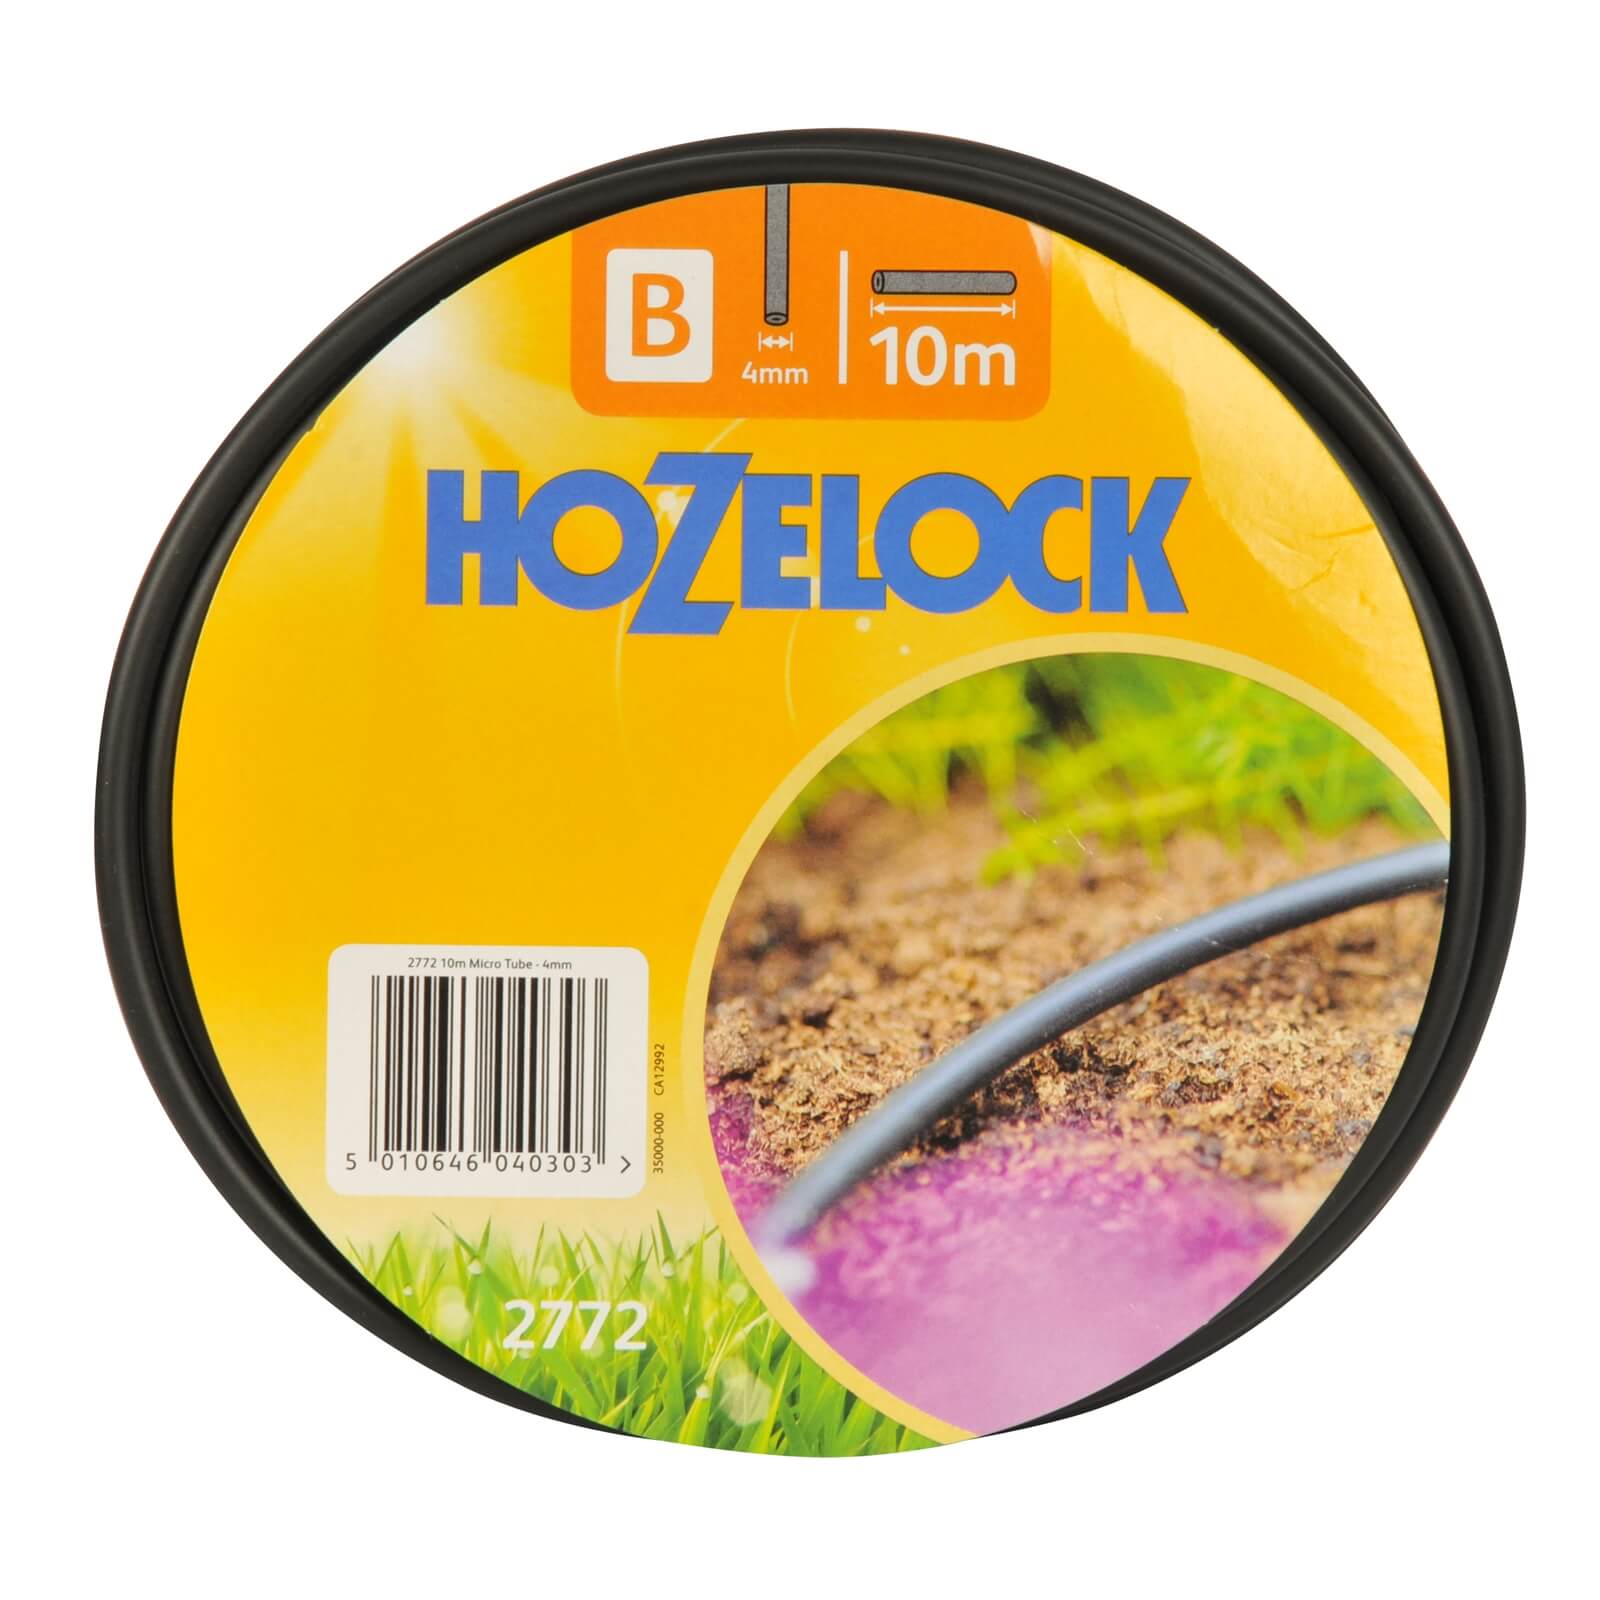 Hozelock Micro Hose - 10m